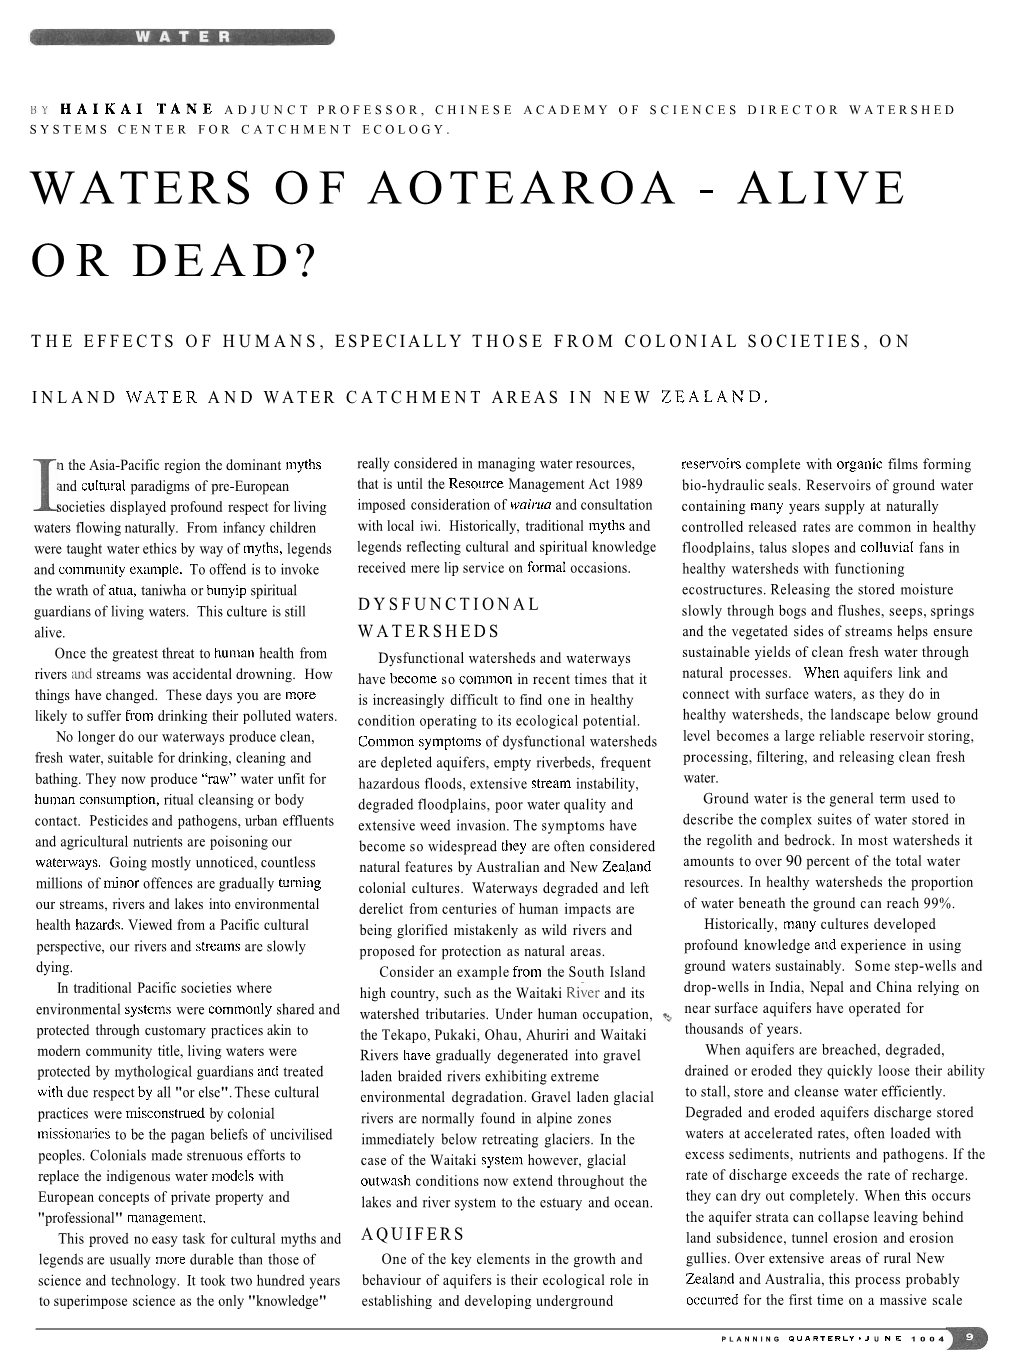 Waters of Aotearoa - Alive Or Dead?